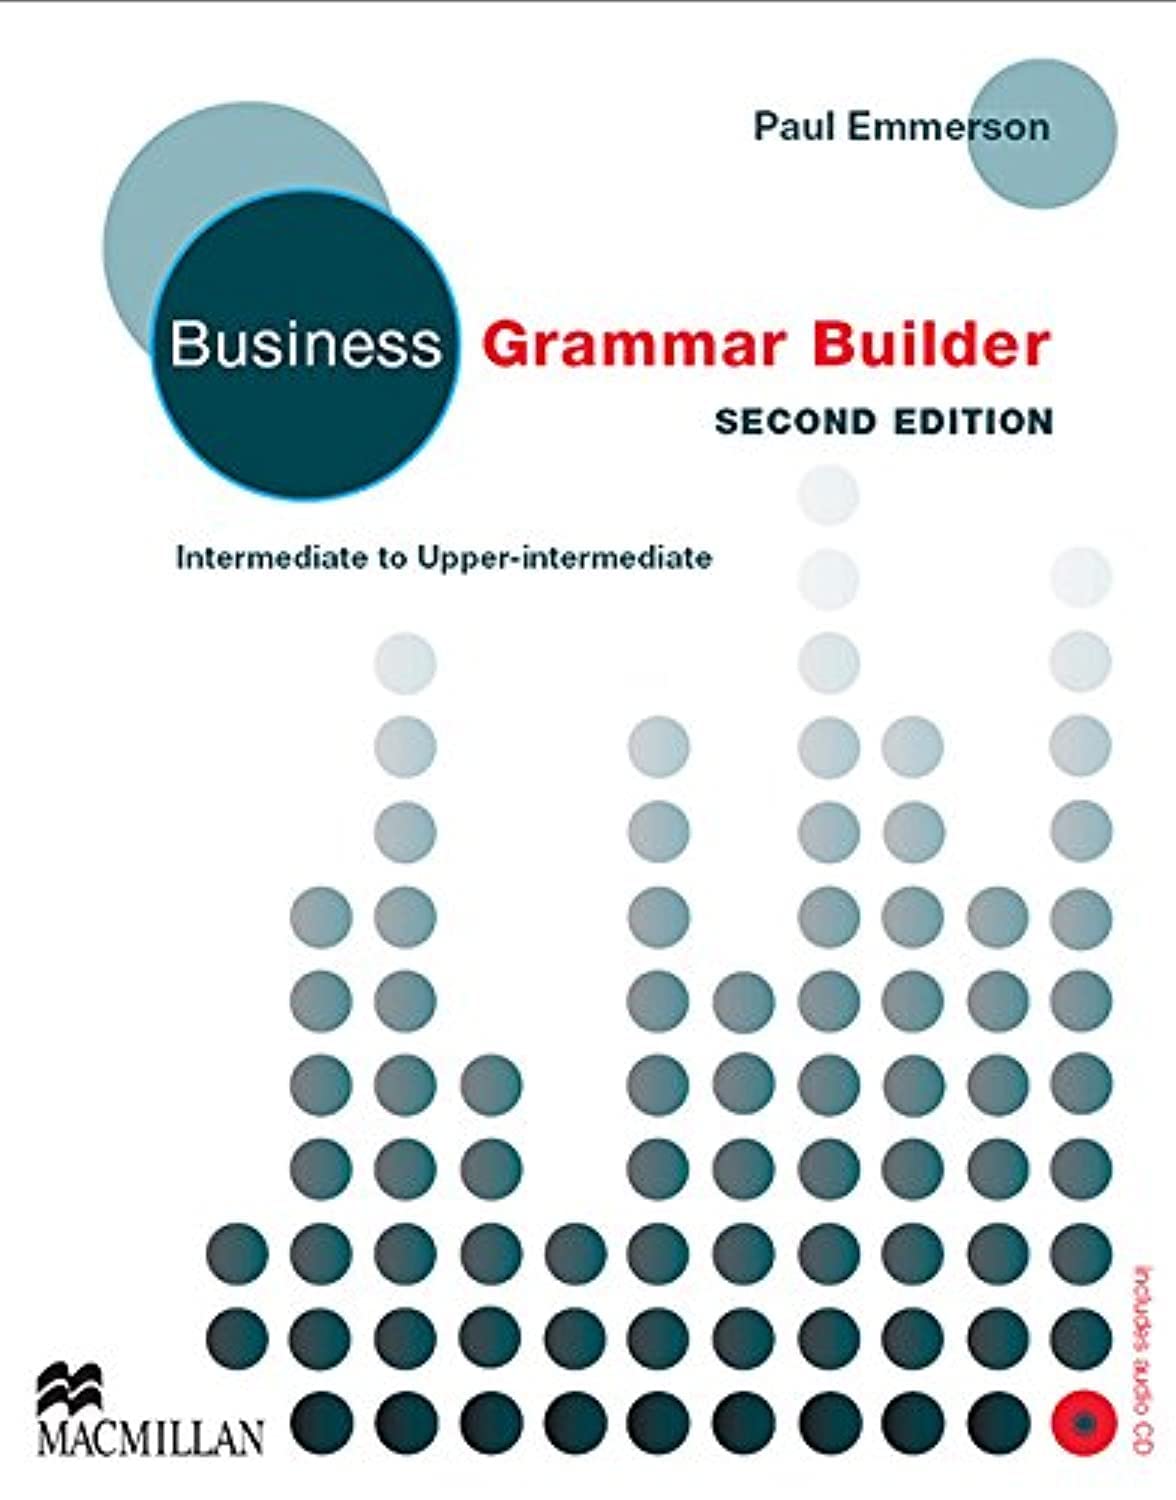 Business Grammar Builder Intermediate to Upper-Intermediate | Paul Emmerson